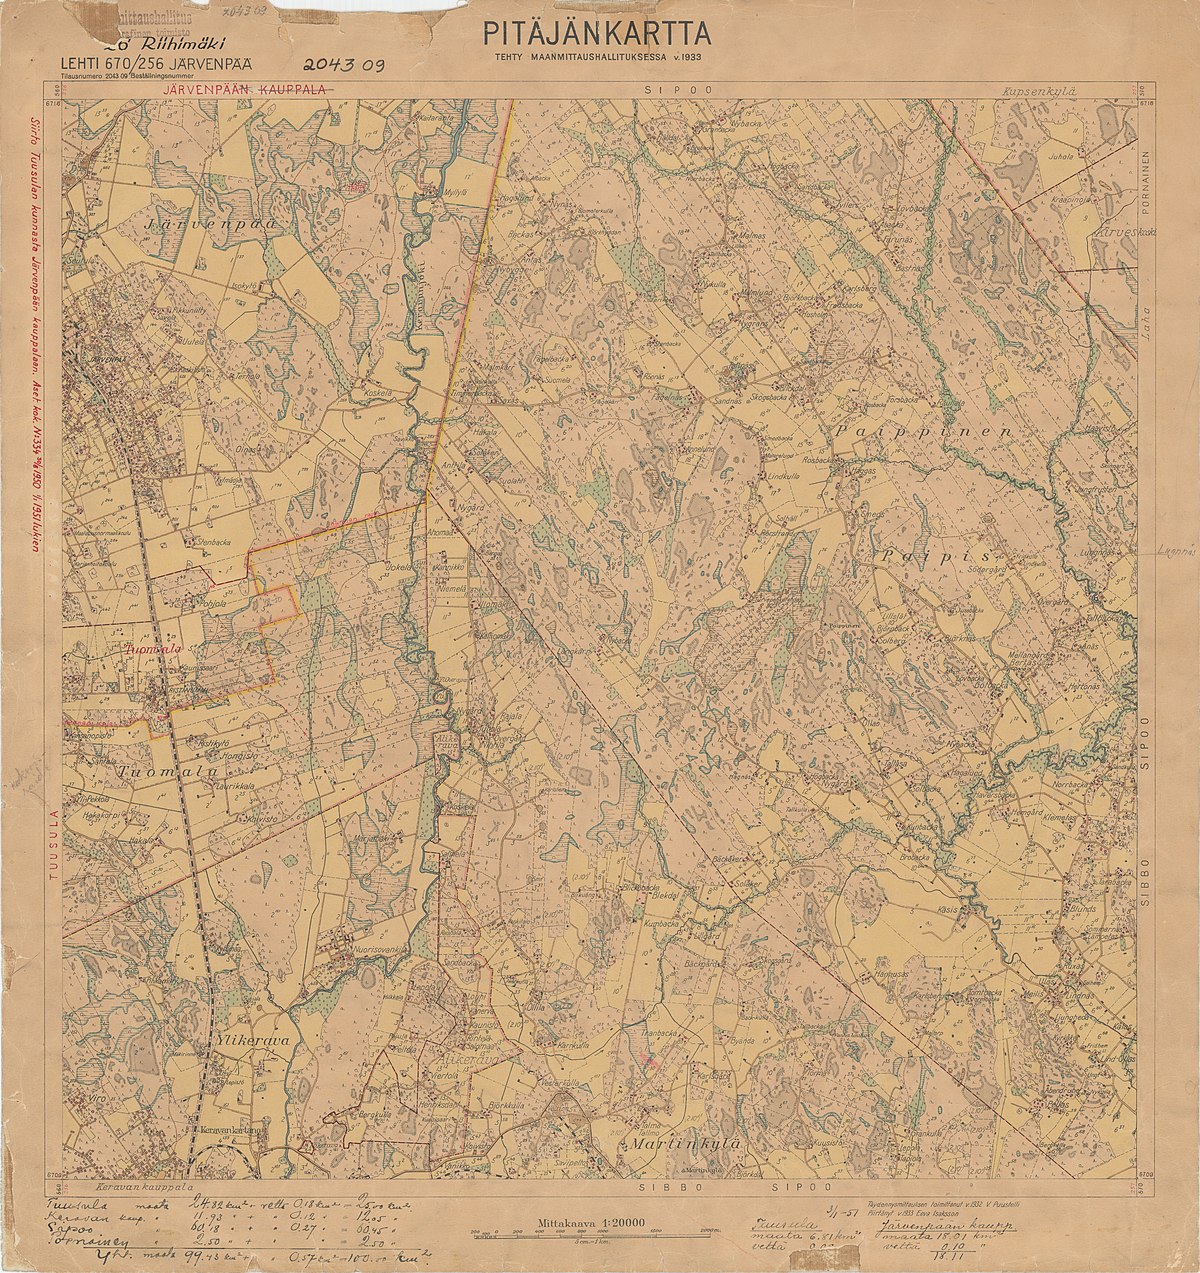 File:36417206 Pitäjänkartta, 1933, karttalehti 204309, Riihimäki, Järvenpää.jpg  - Wikimedia Commons